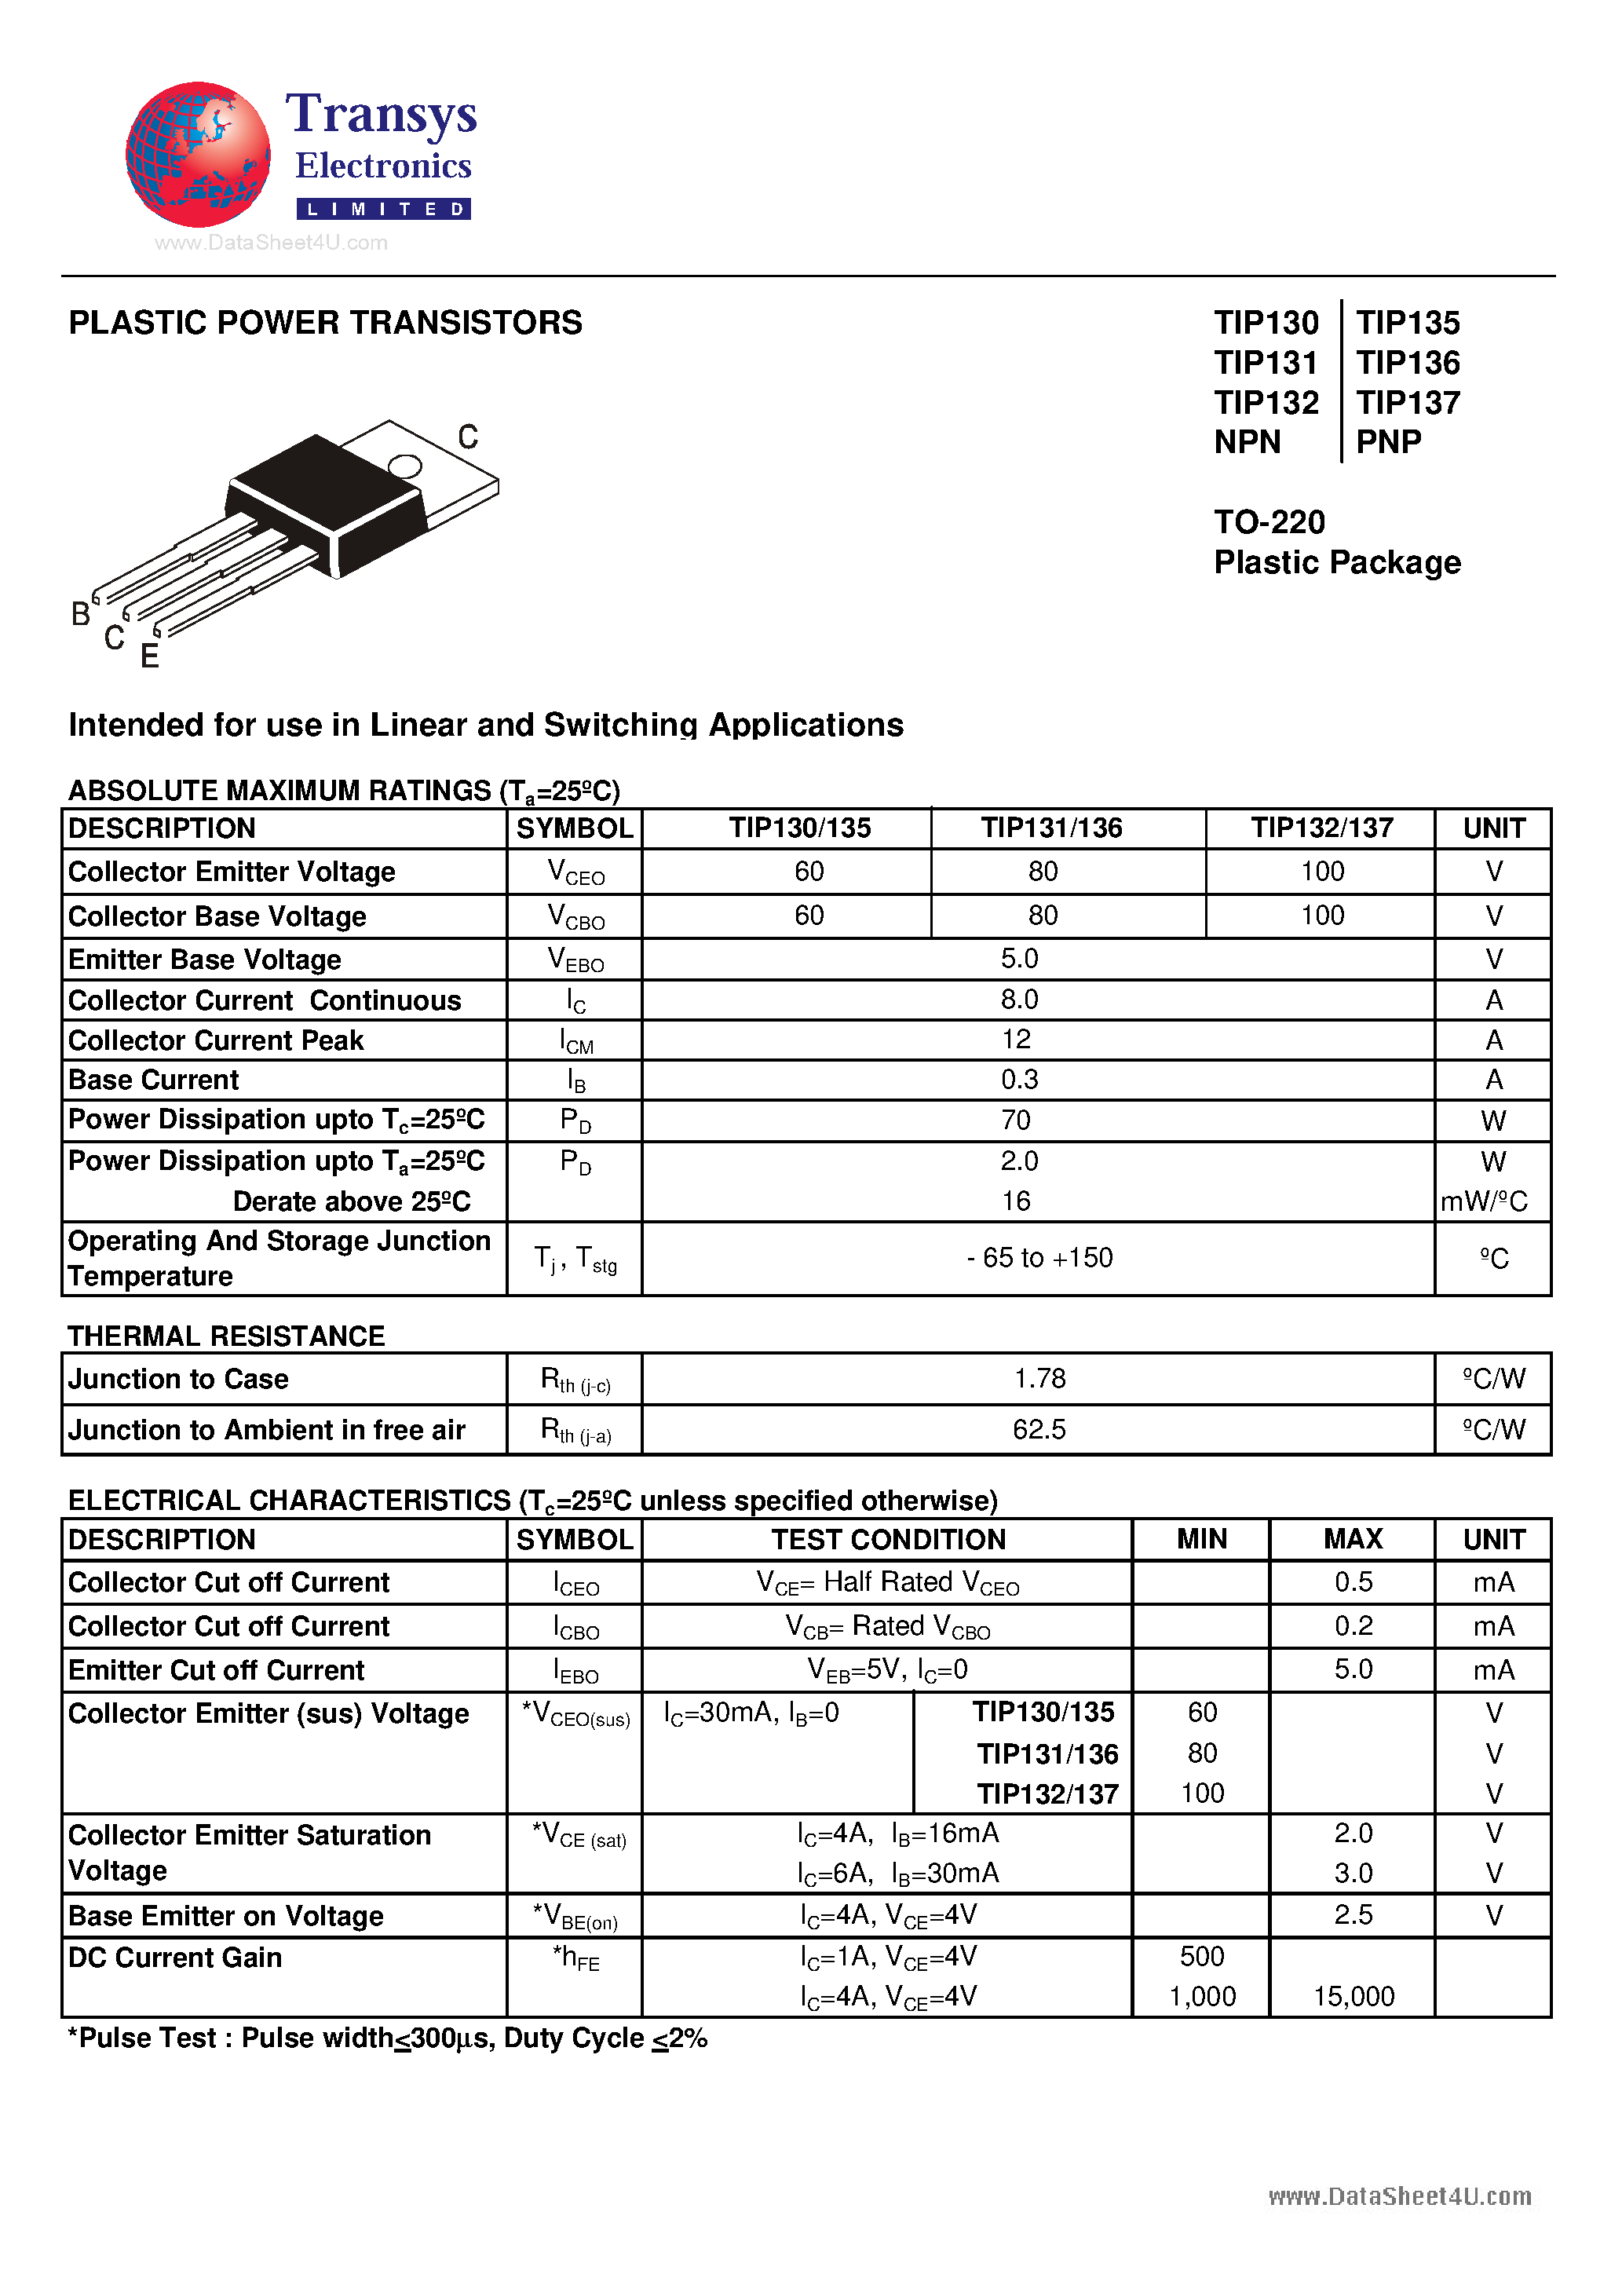 Datasheet TIP130 - (TIP130 - TIP137) PLASTIC POWER TRANSISTORS page 1